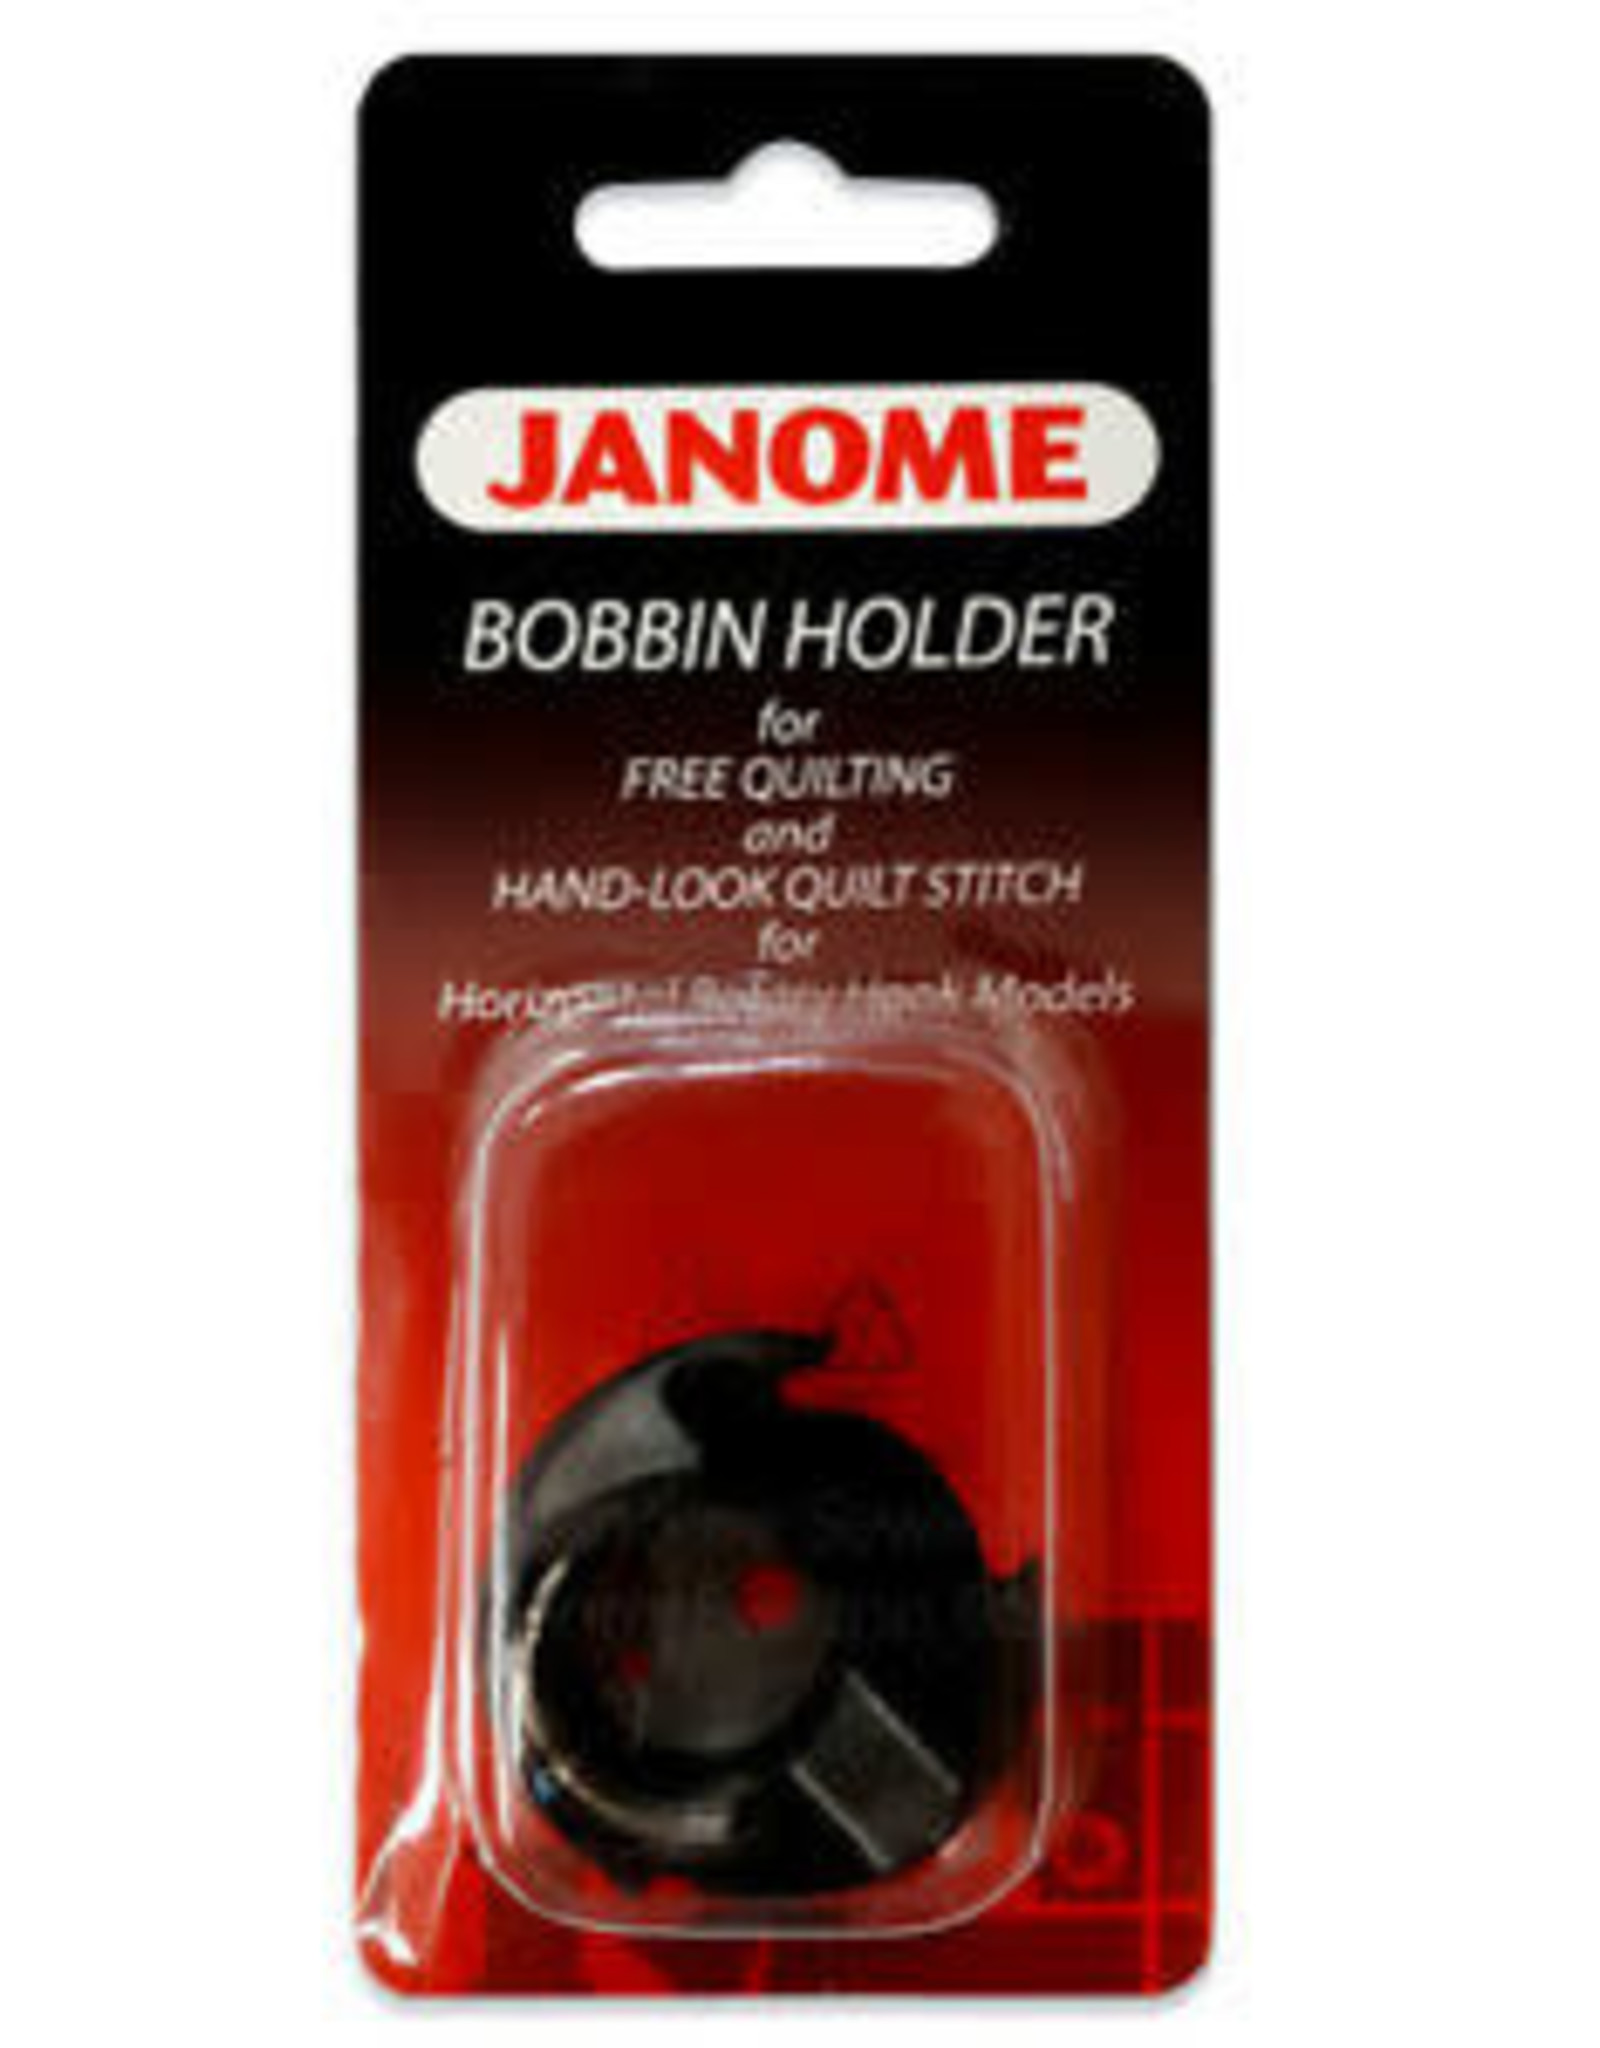 Janome Bobbin Holder BLUE DOT CUTTER - 202006008